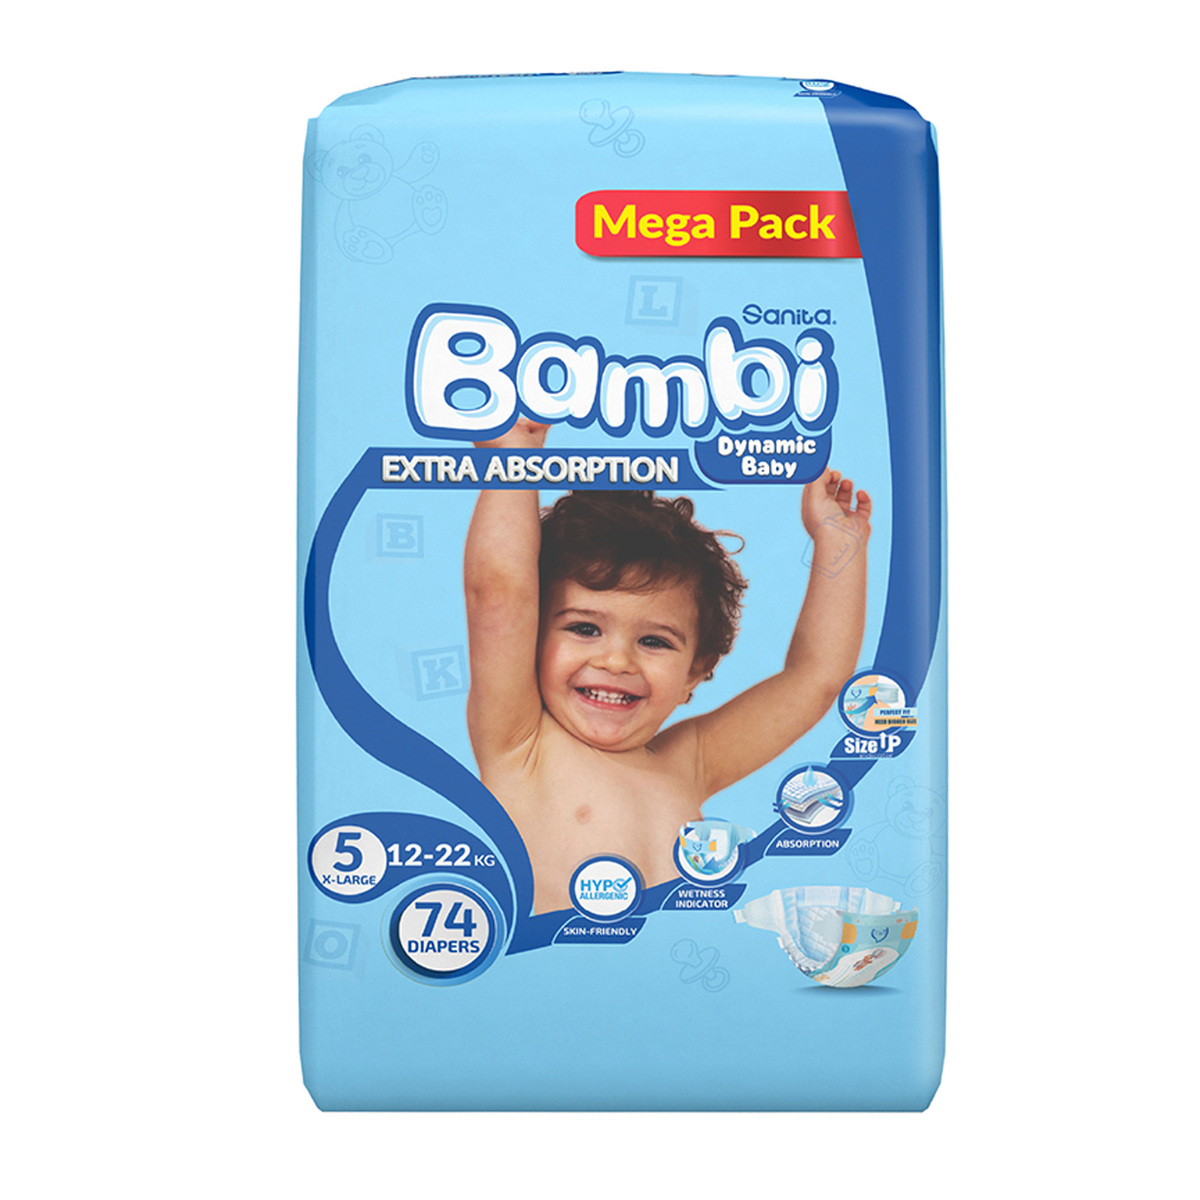 Sanita Bambi Baby Diaper Mega Pack Size 5 Extra Large 12-22kg 74 pcs